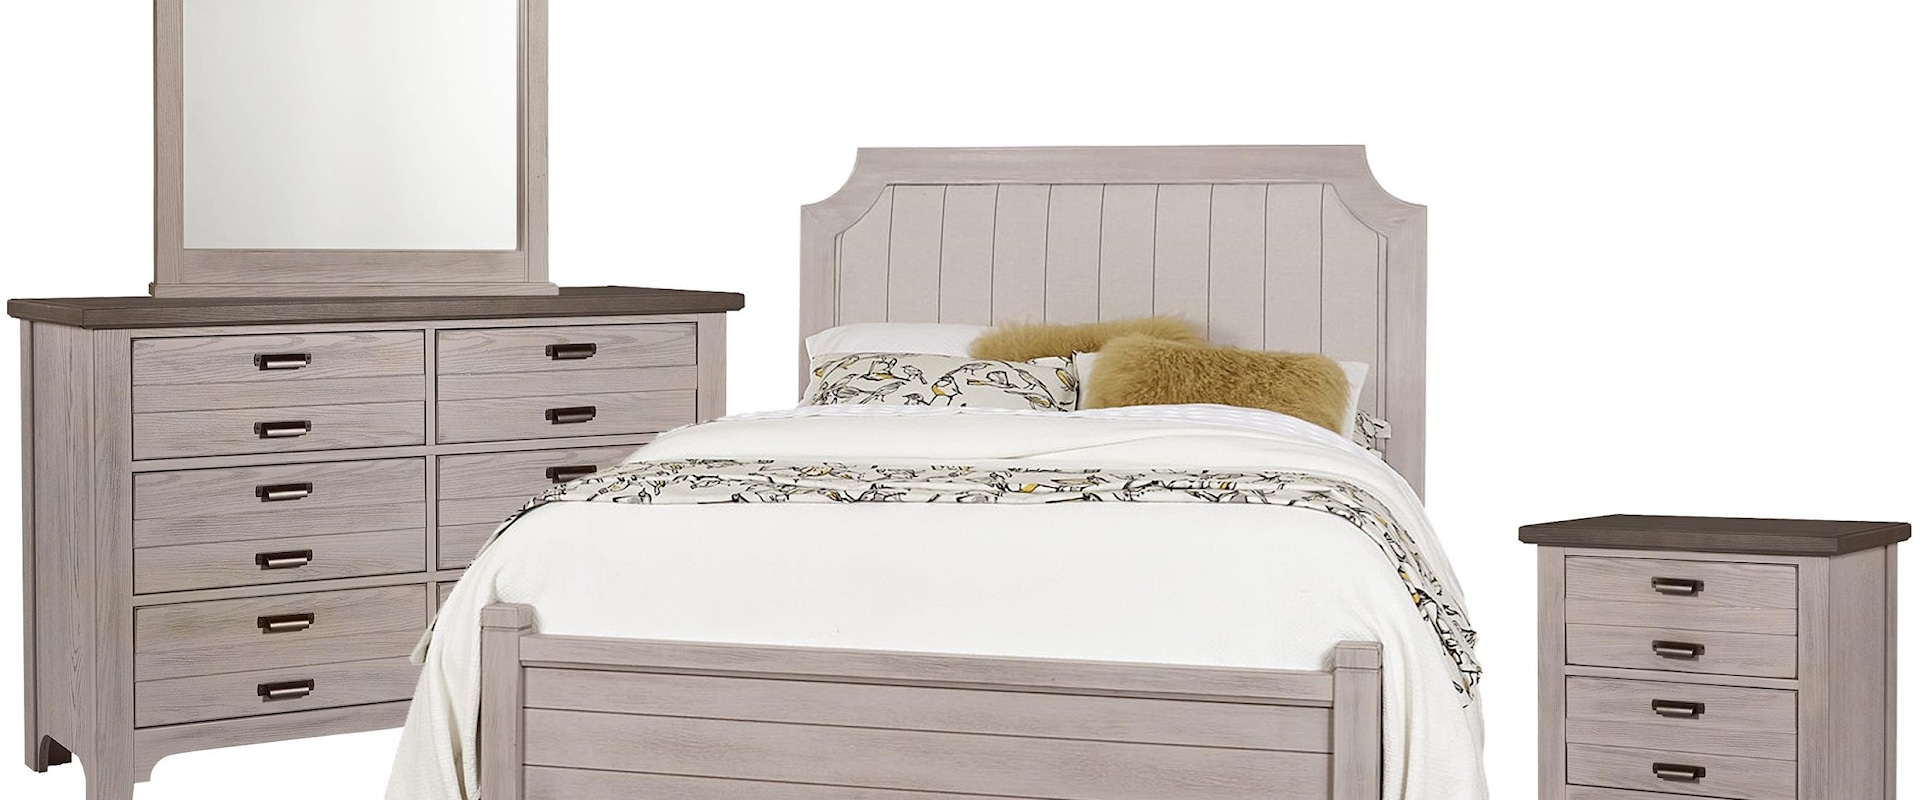 Queen Upholstered Bed, Double Dresser, Landscape Mirror, 2 Drawer Nightstand